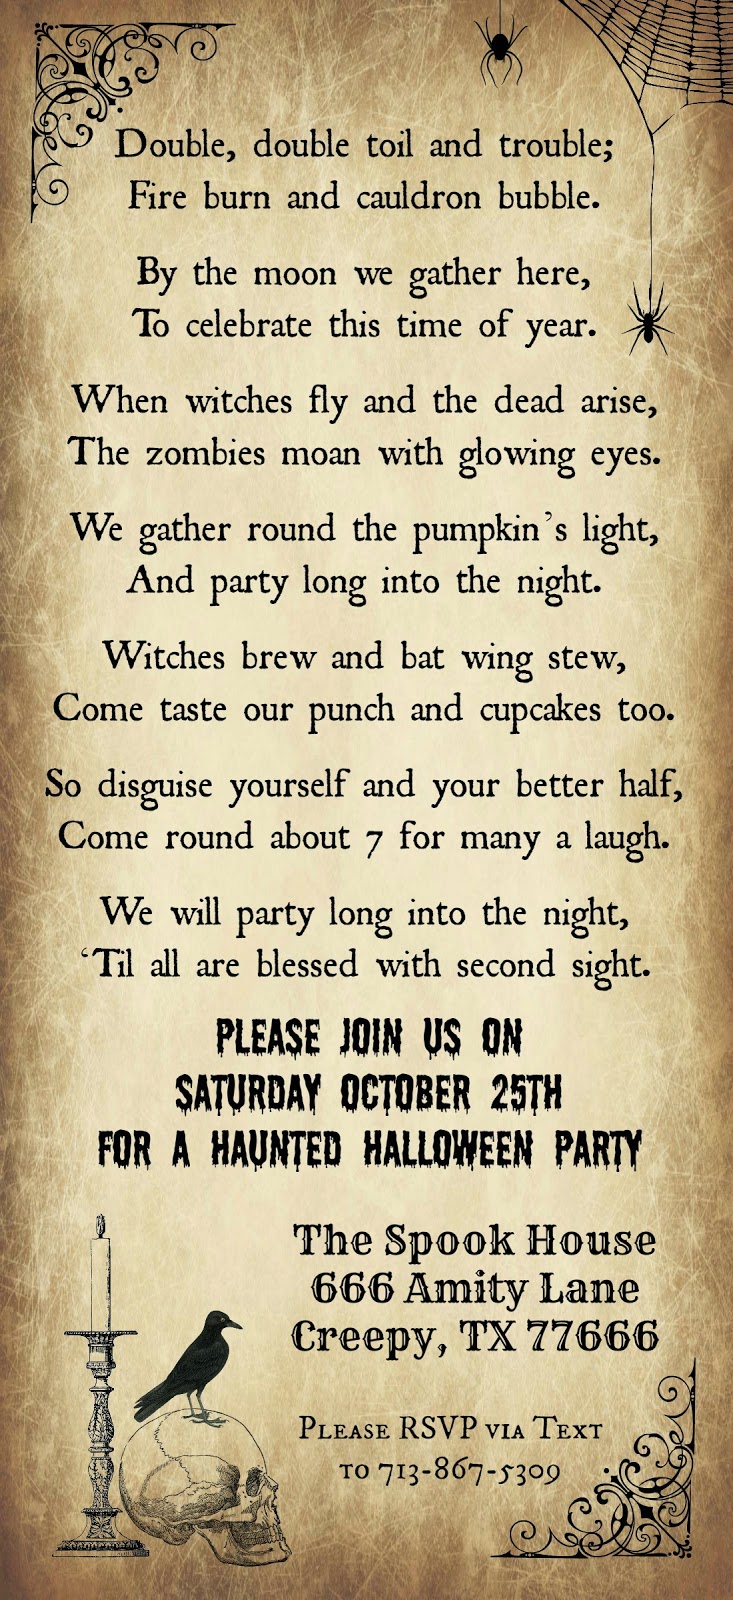 Crafty In Crosby Halloween Party Invitation 2014